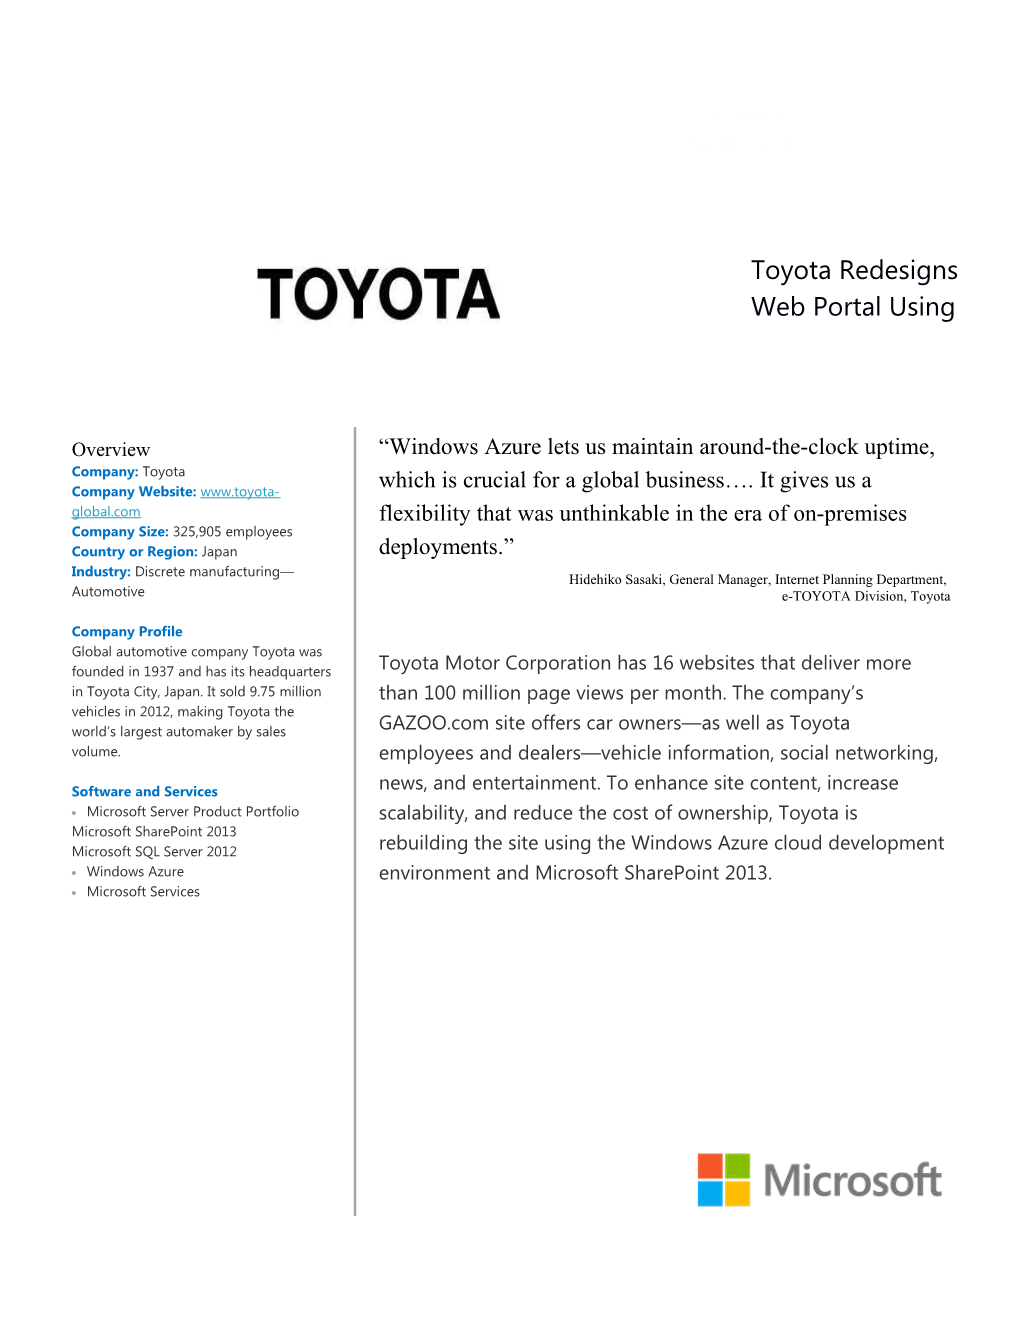 Toyota Motor Corporation, Based in Toyota City, Japan, Sold 9.75 Million Vehicles Worldwide